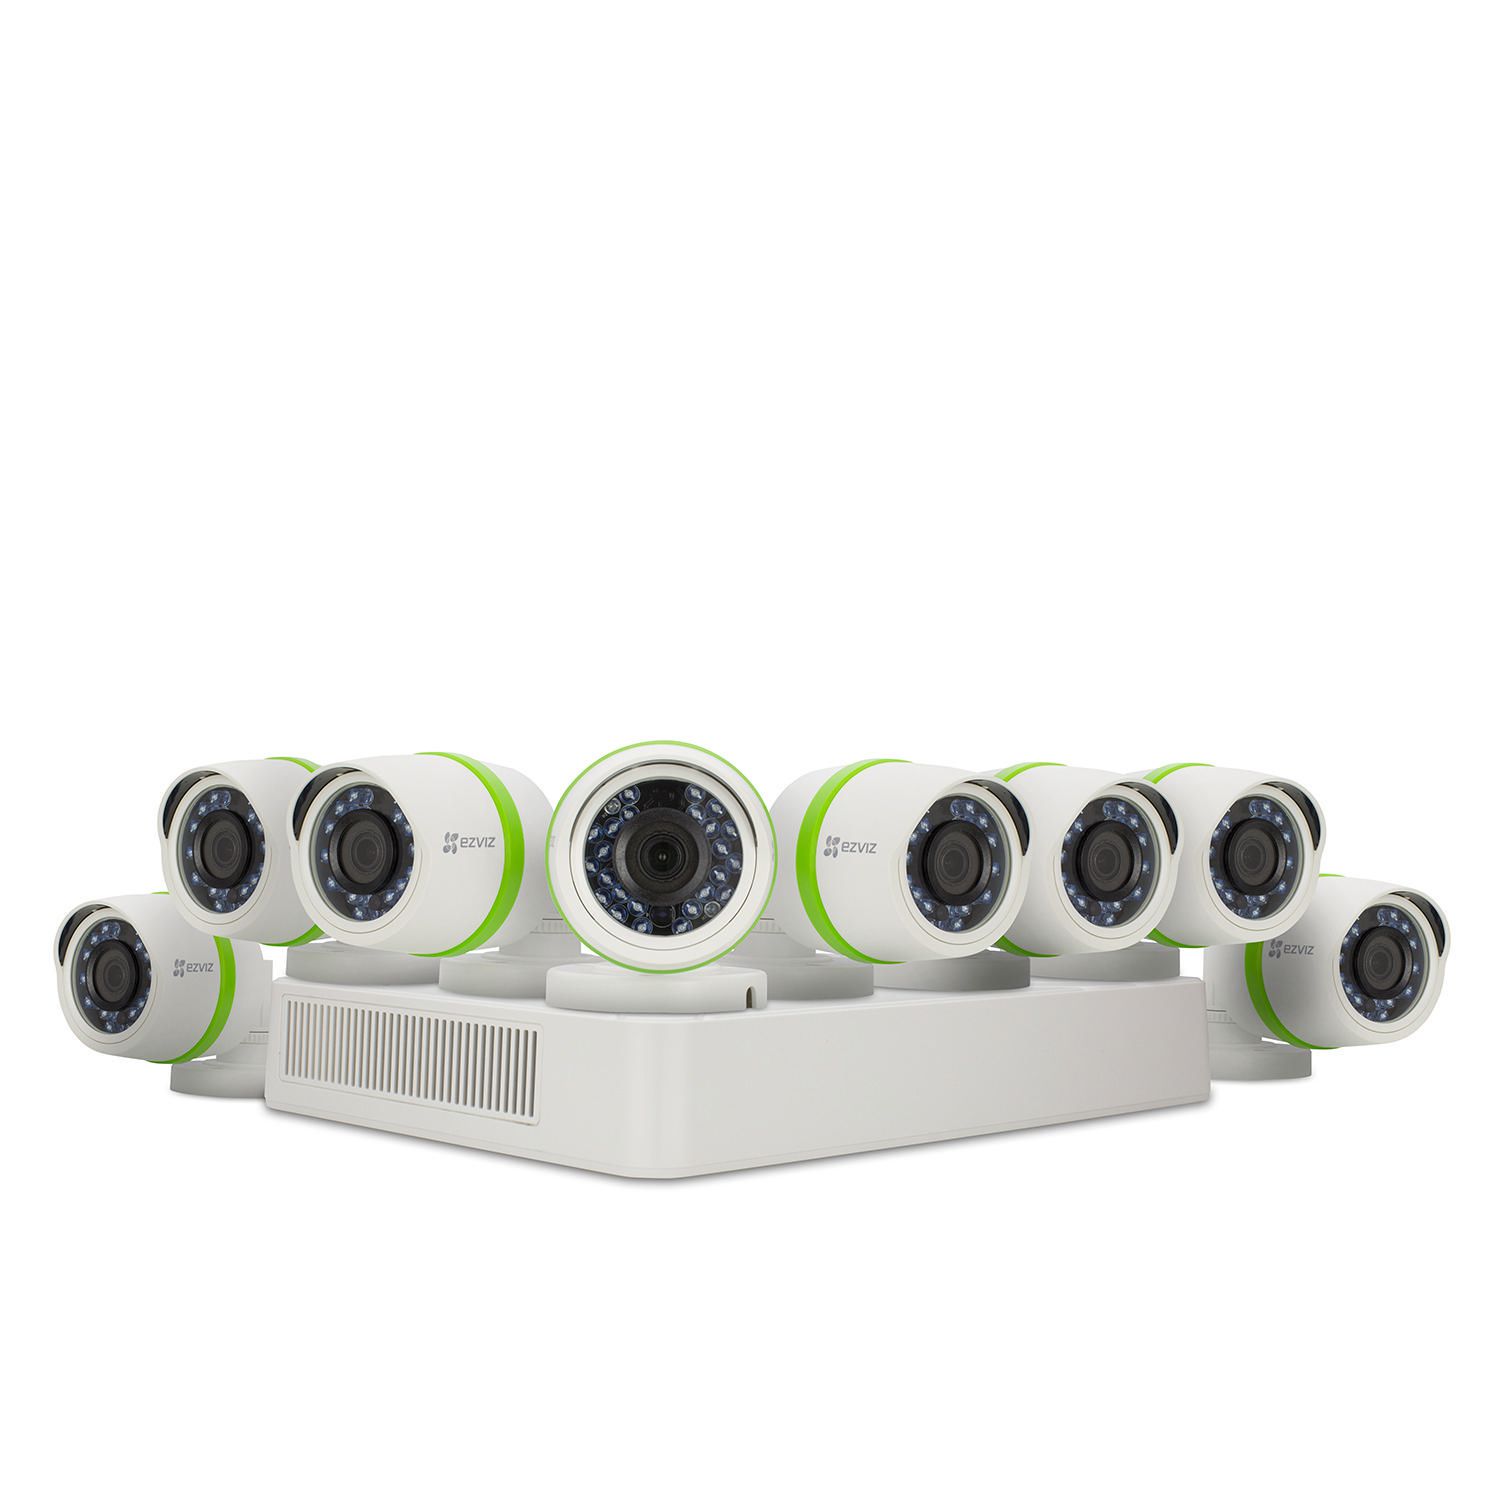 Ezviz регистратор. SDH-b3040. Видеорегистратор EZVIZ. Hikvision Motion Detection. Outdoor Surveillance System os-100-250.